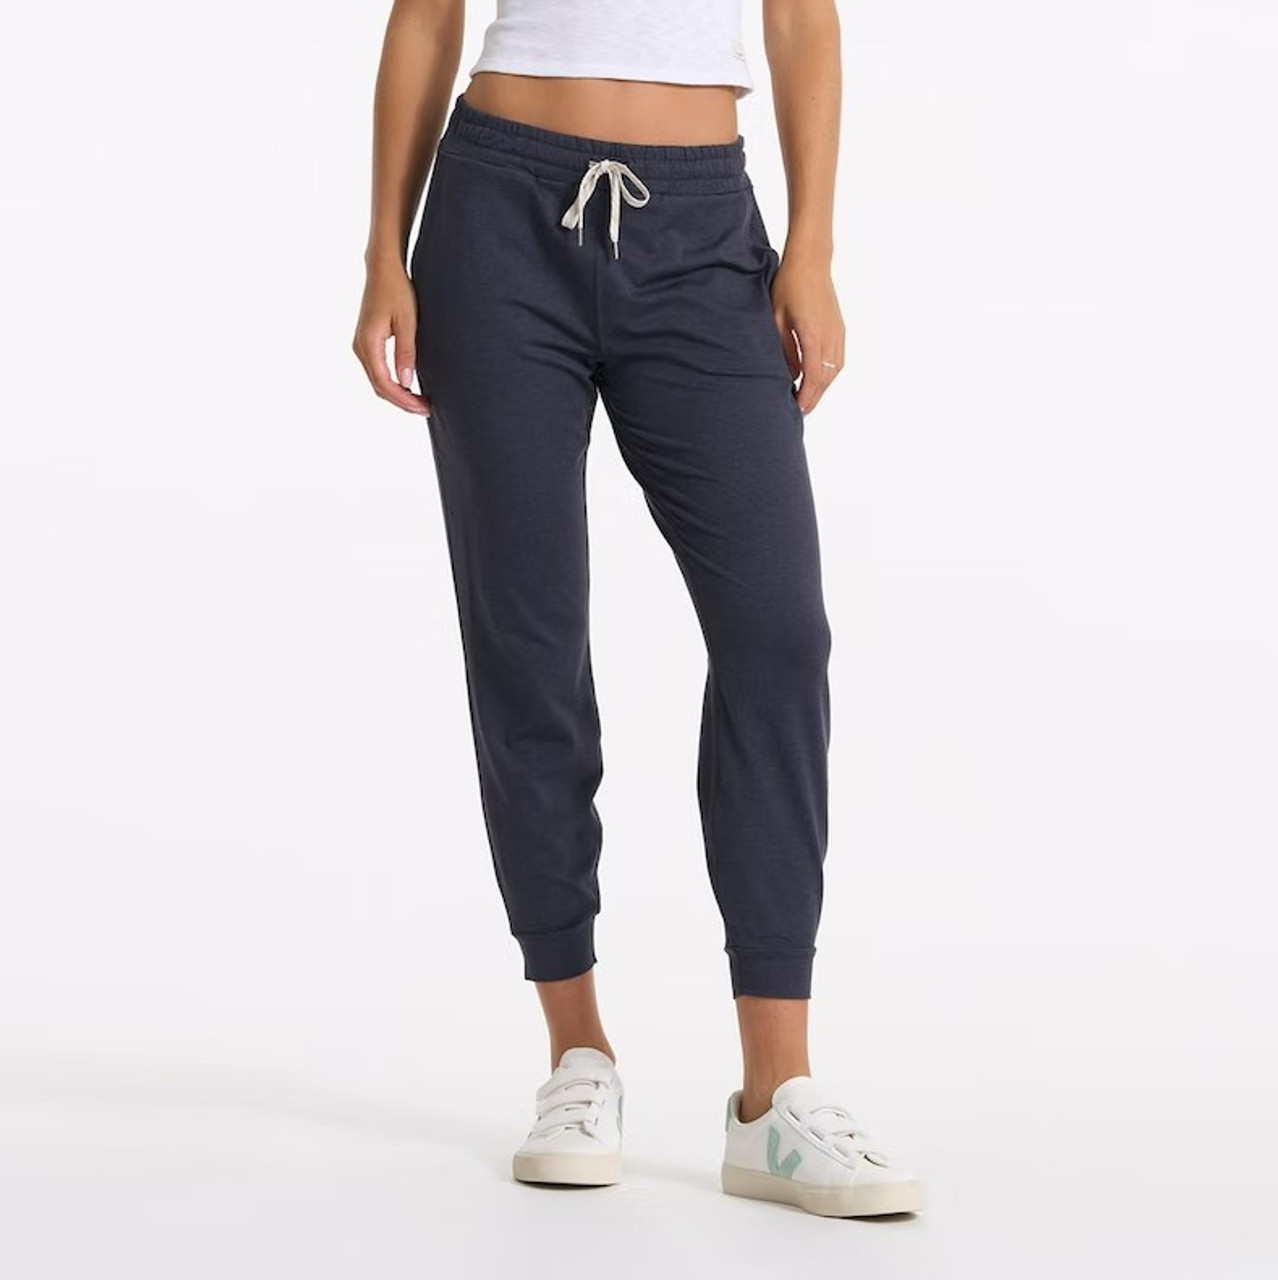  Athletic Work Women's Soft Jogger Pants 2 Side Pockets  (XX-Large, Medium Grey Heather) : Clothing, Shoes & Jewelry